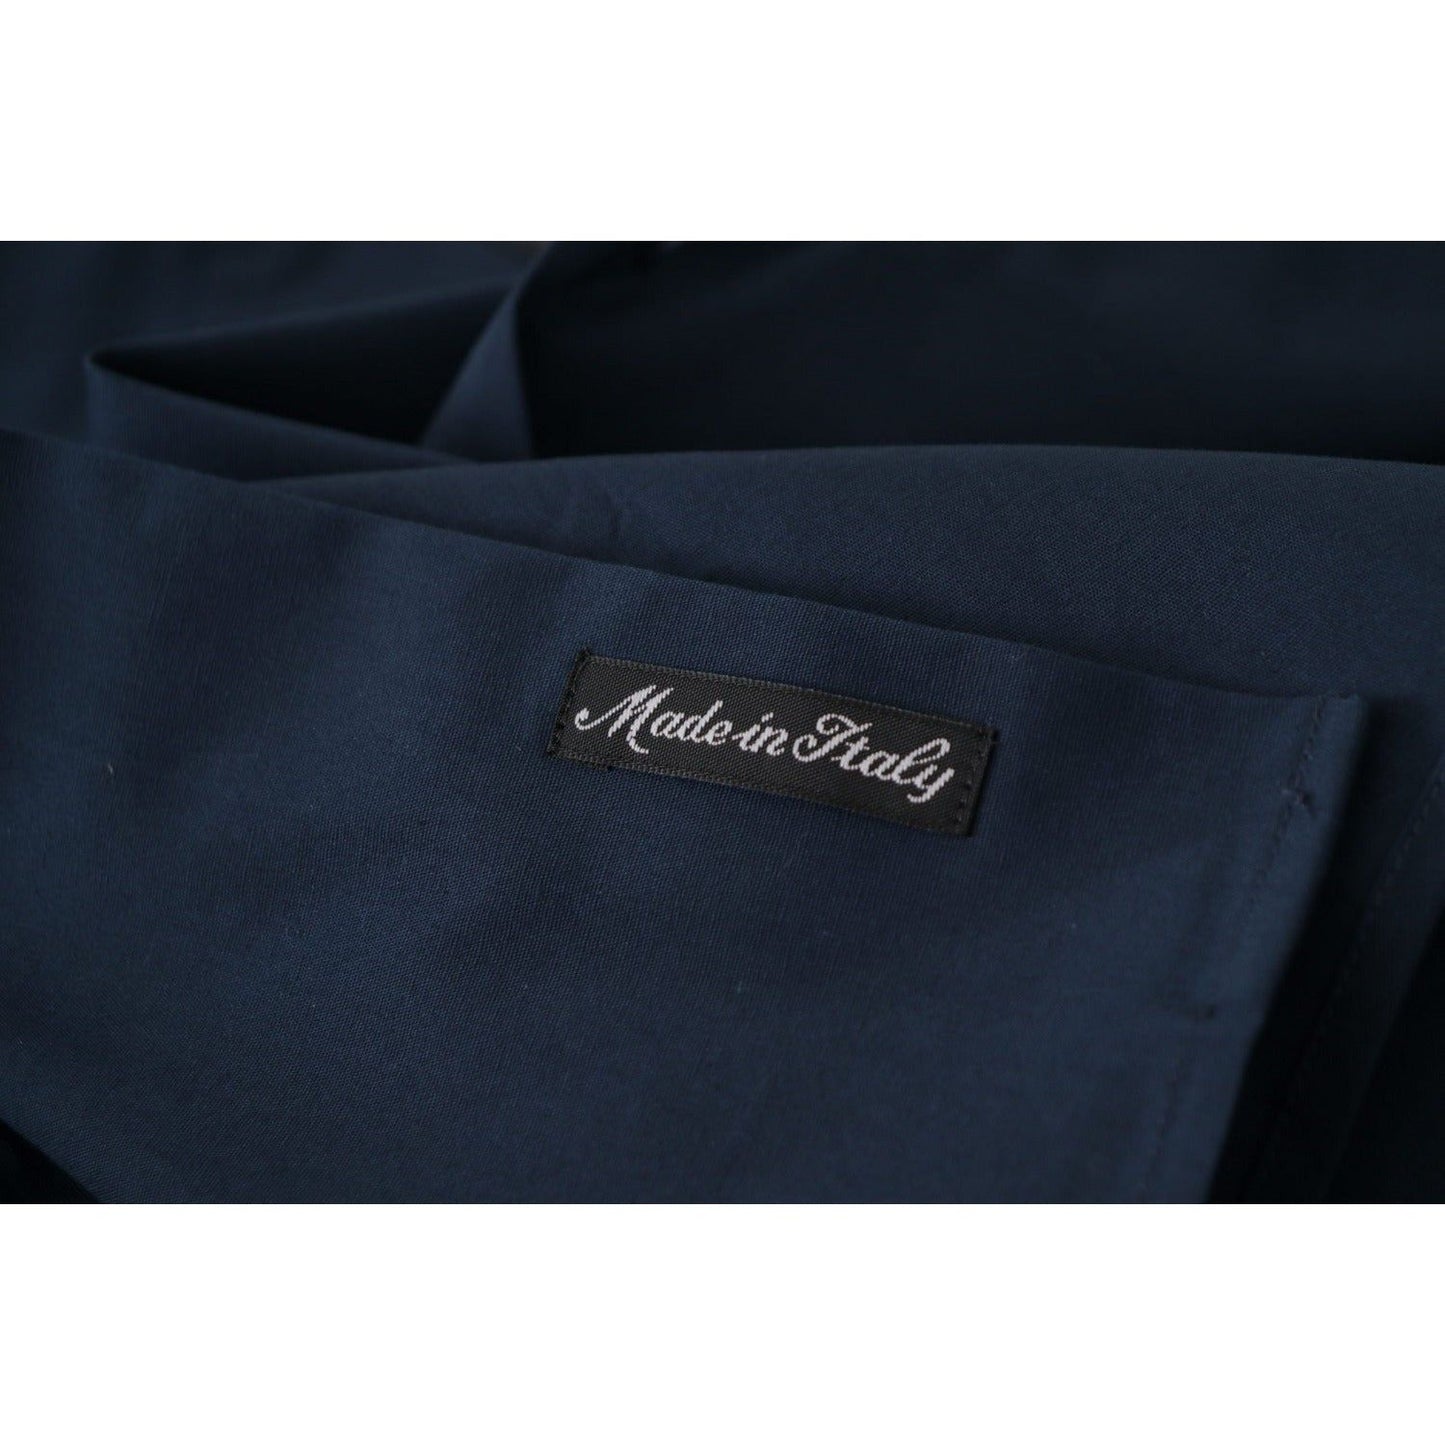 Roberto Cavalli Navy Elegance Cotton Dress Shirt navy-blue-cotton-dress-formal-shirt IMG_2055-scaled-726531f3-e63.jpg